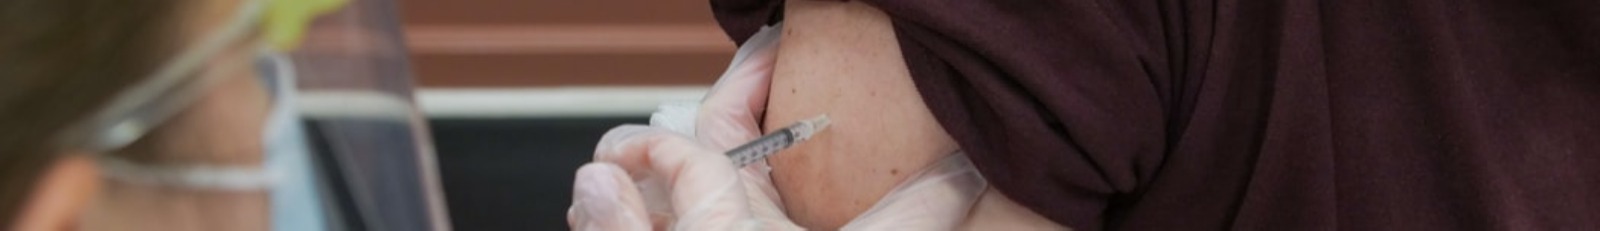 Nurse giving a COVID-19 vaccine to man